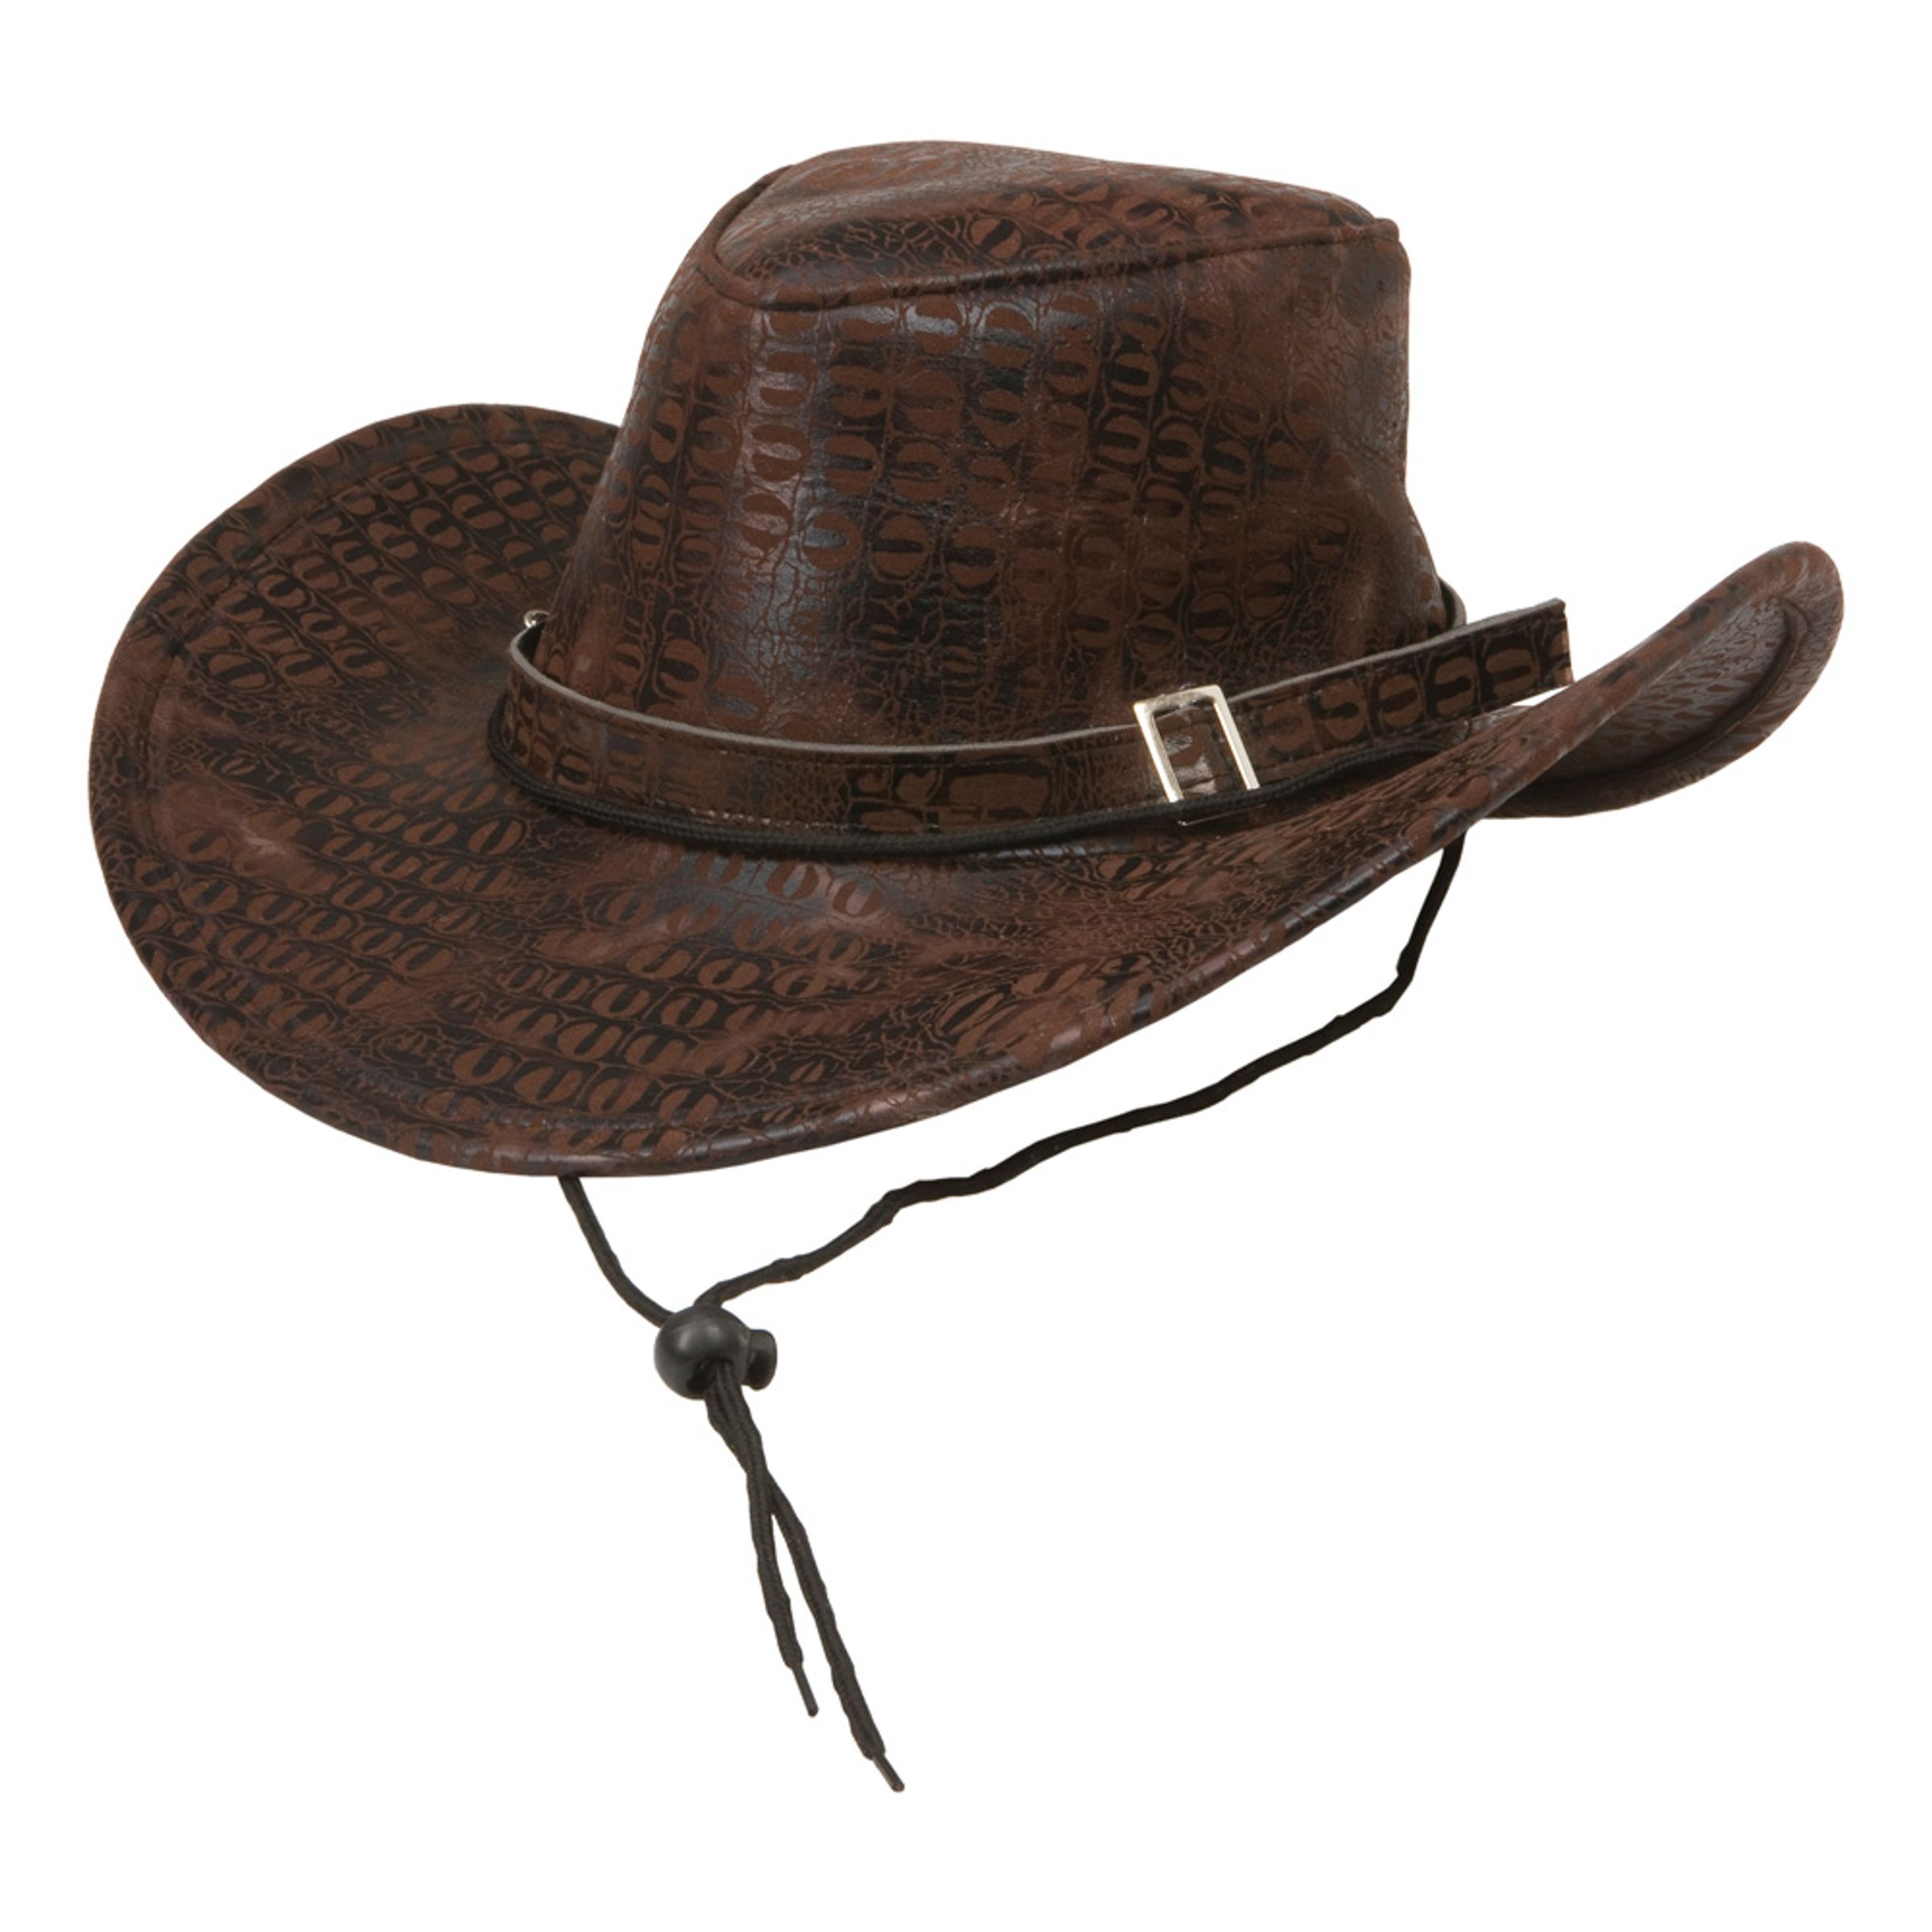 Cowboyhatt Brun - One size